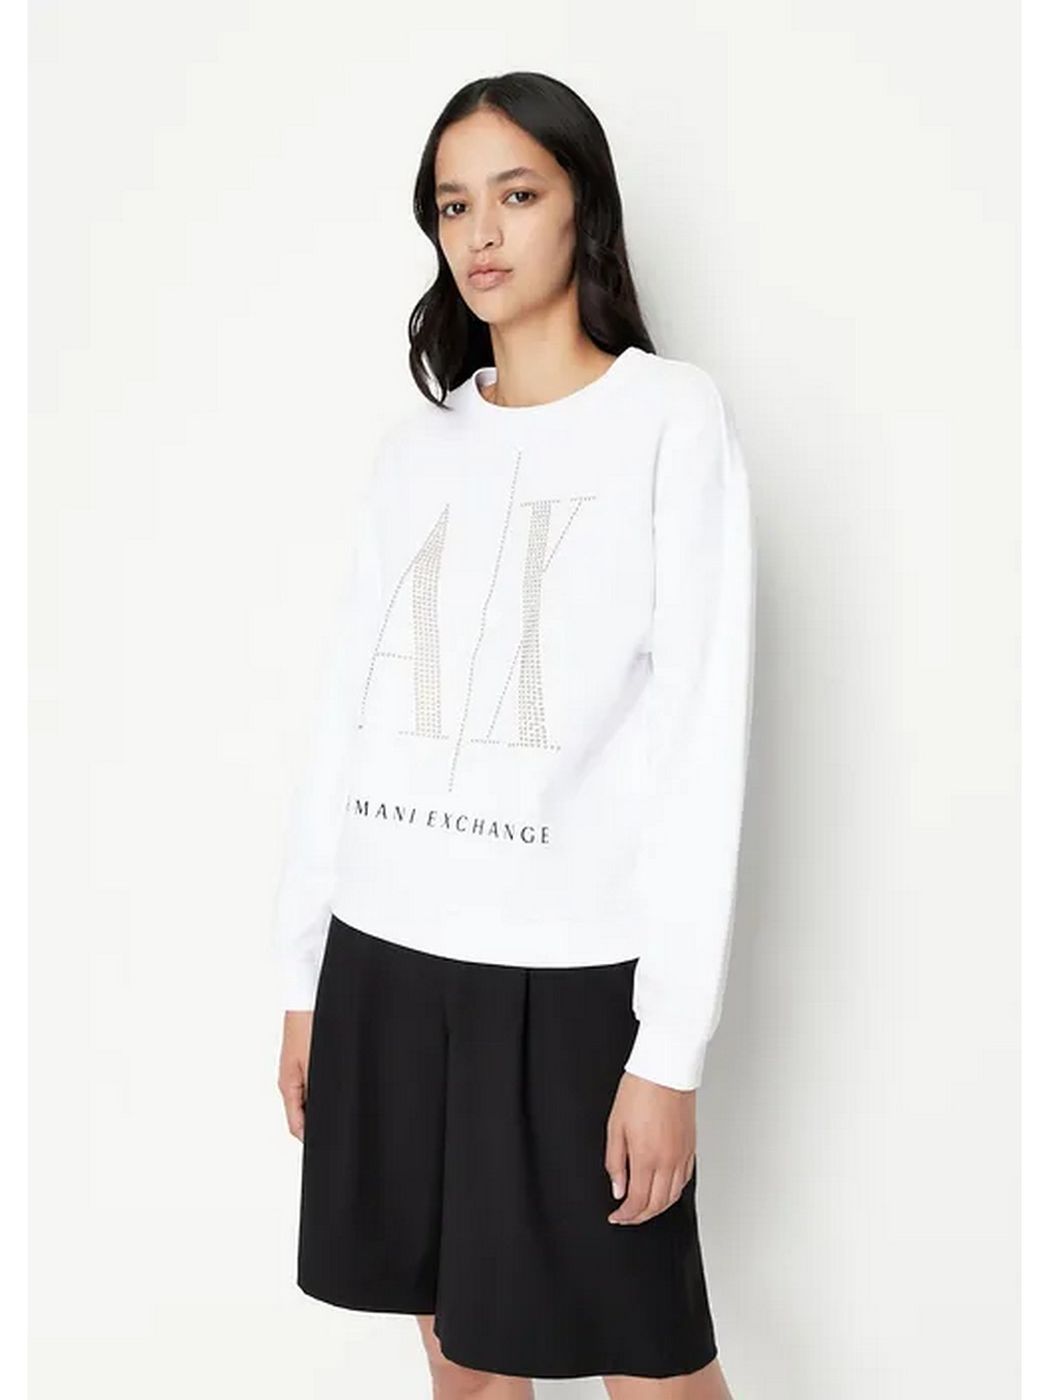 ARMANI EXCHANGE Sweatshirt Femme 8NYM01 YJ68Z 1000 Blanc